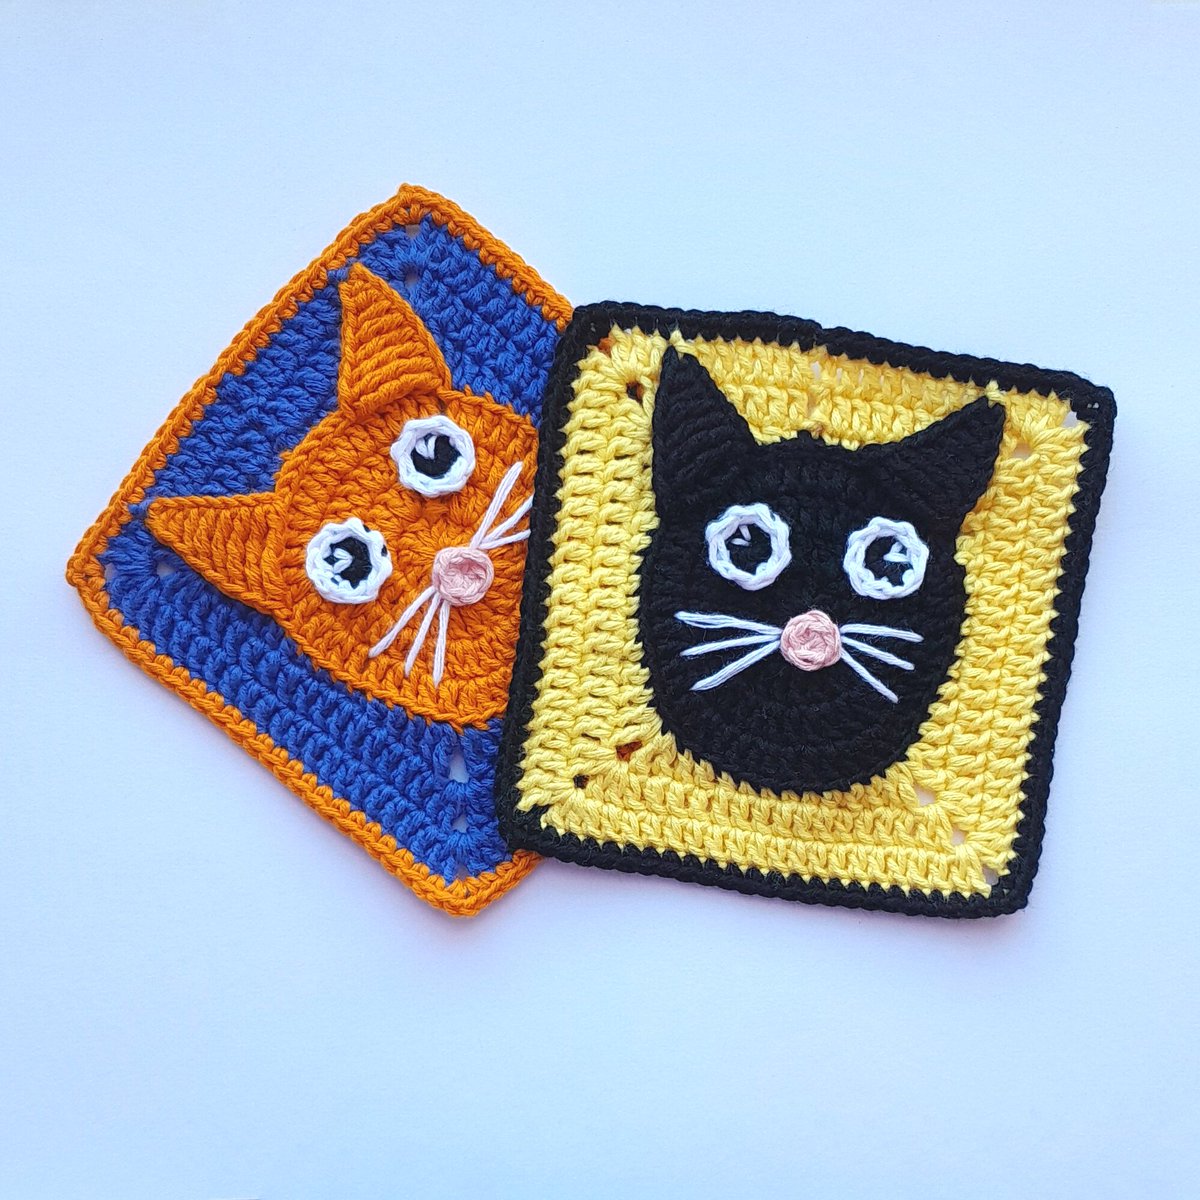 Granny Square Cat Pattern, Crochet Cat Pattern
ravelry.com/patterns/libra…

#Ravelry #crochet #GrannySquarePattern #crochetpattern #grannysquare #crocheter #crocheting #crochetideas #handmade #craft #idea #giftidea #gift #gifts